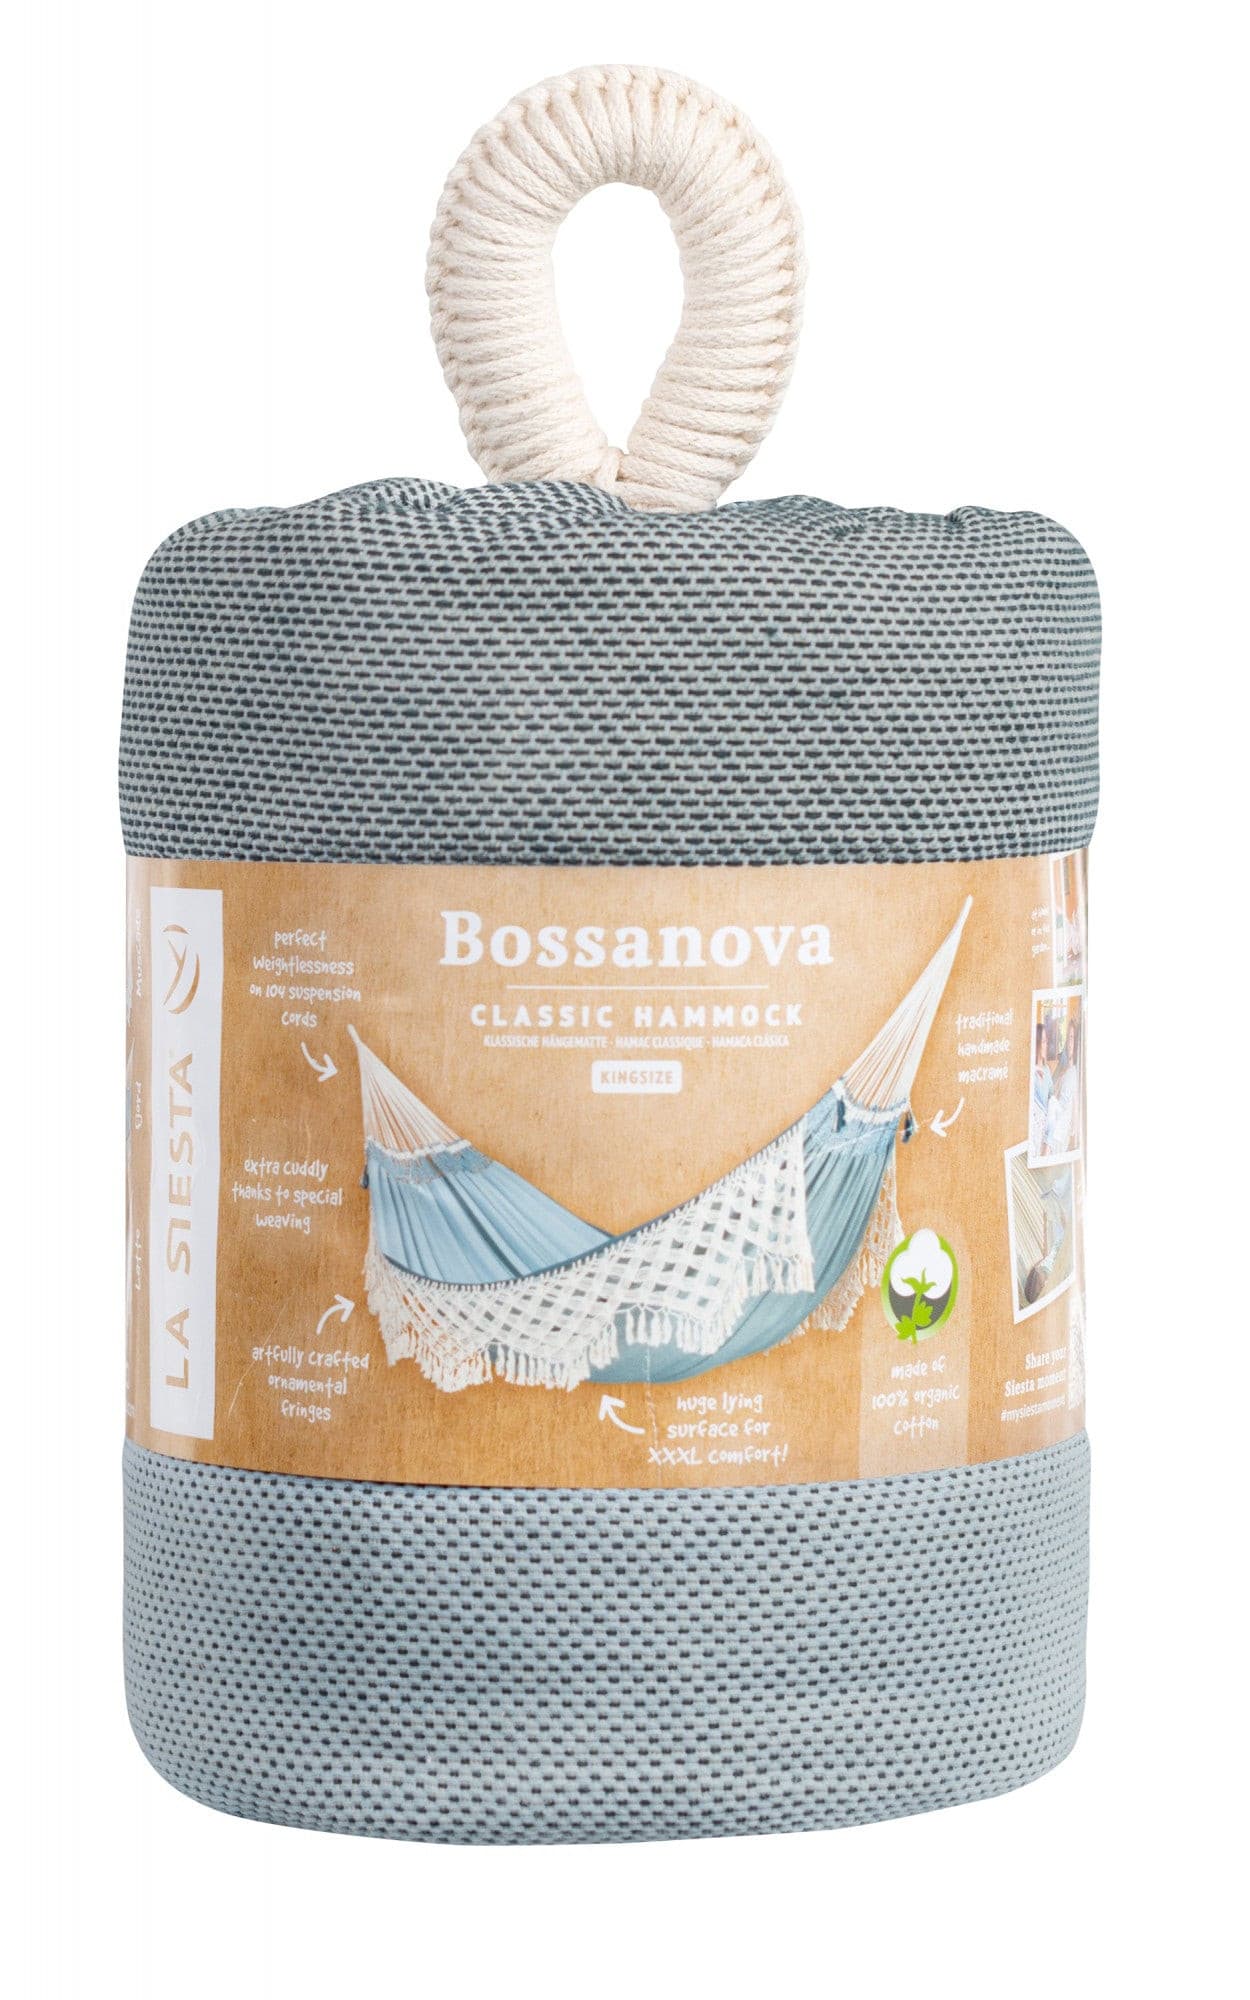 Bossanova Fjord - Organic Cotton Kingsize Classic Hammock